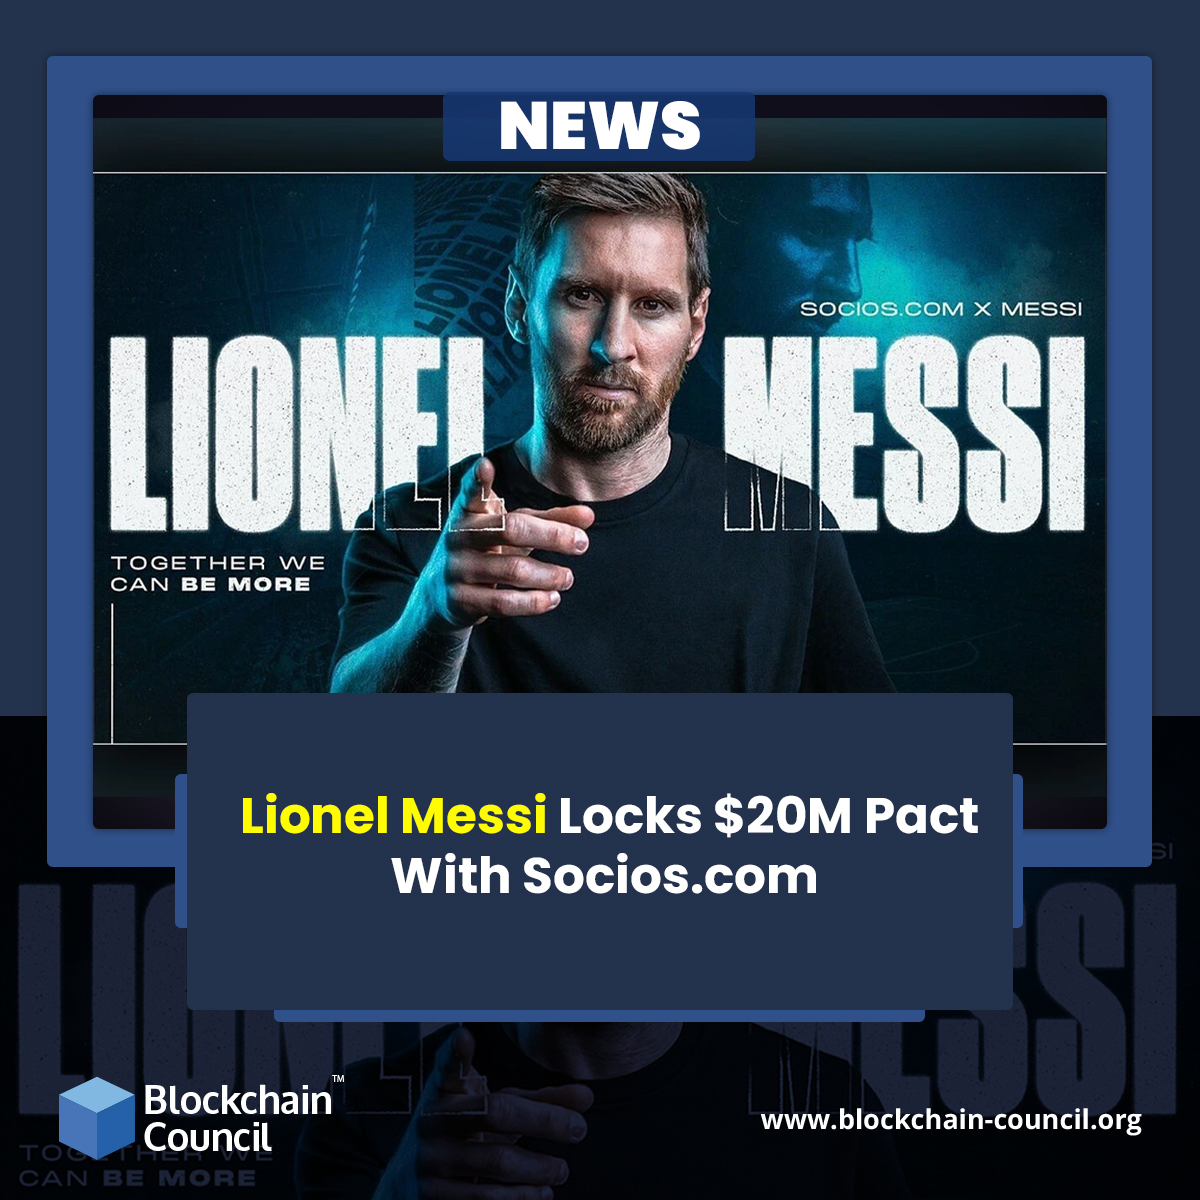 Lionel Messi Locks $20M Pact With Socios.com